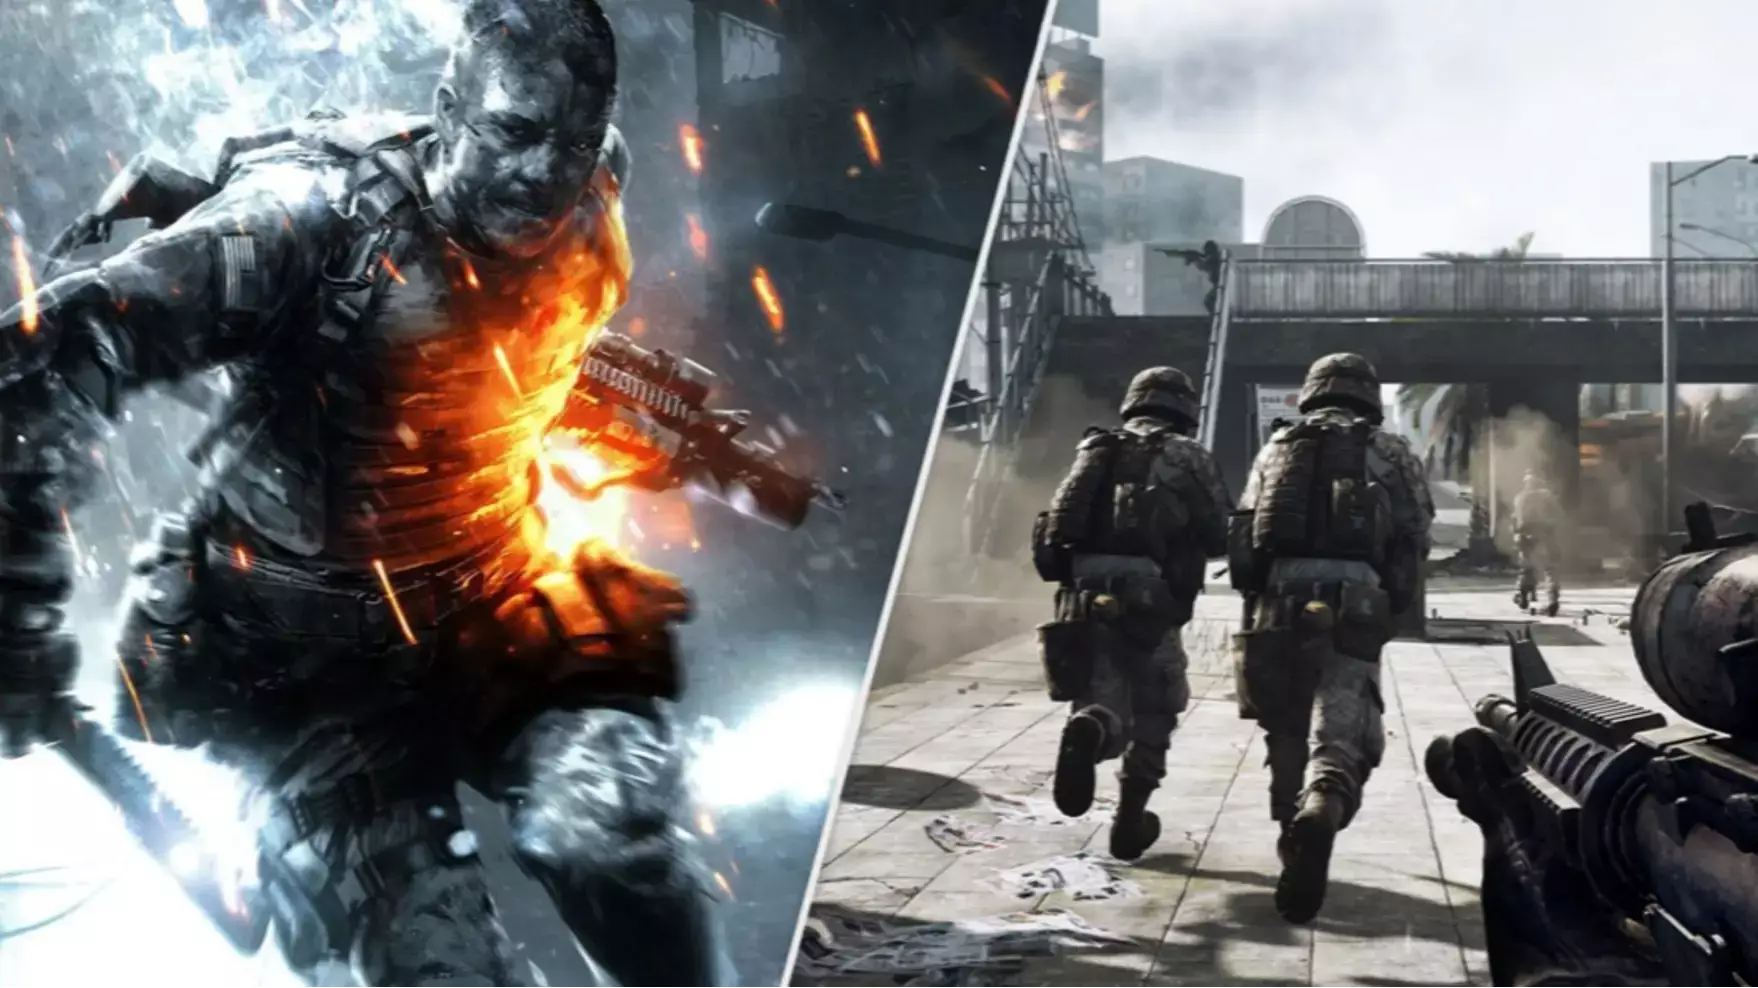 'Battlefield 6' Gameplay Shown Off In Apparent Online Leaks